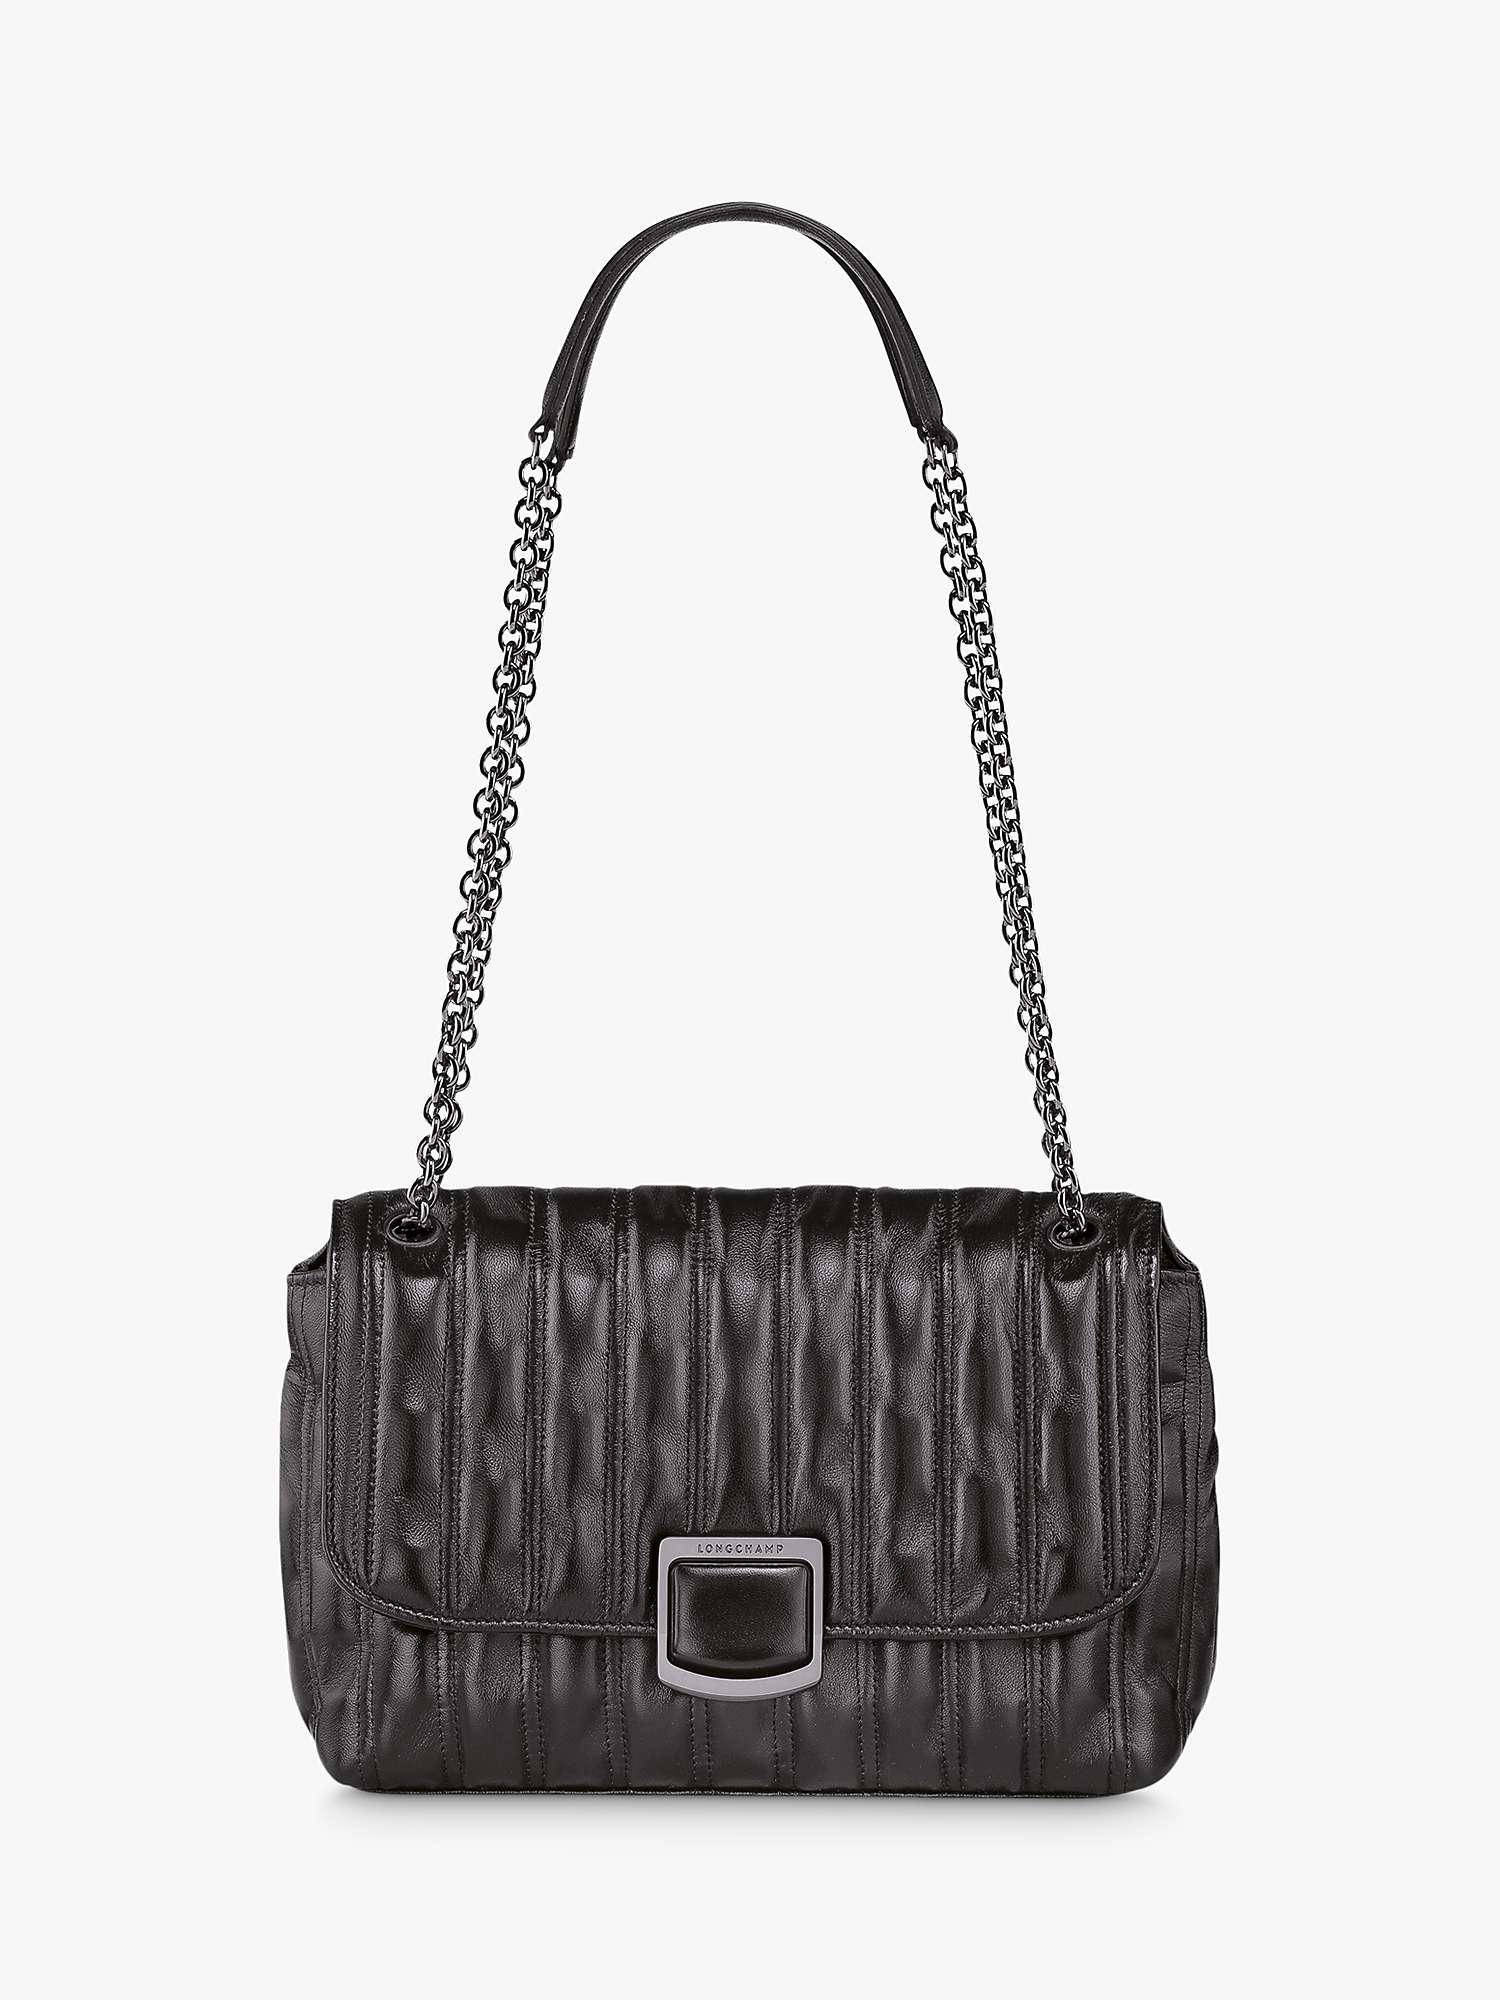 Buy Longchamp Brioche Leather Cross Body Bag Online at johnlewis.com